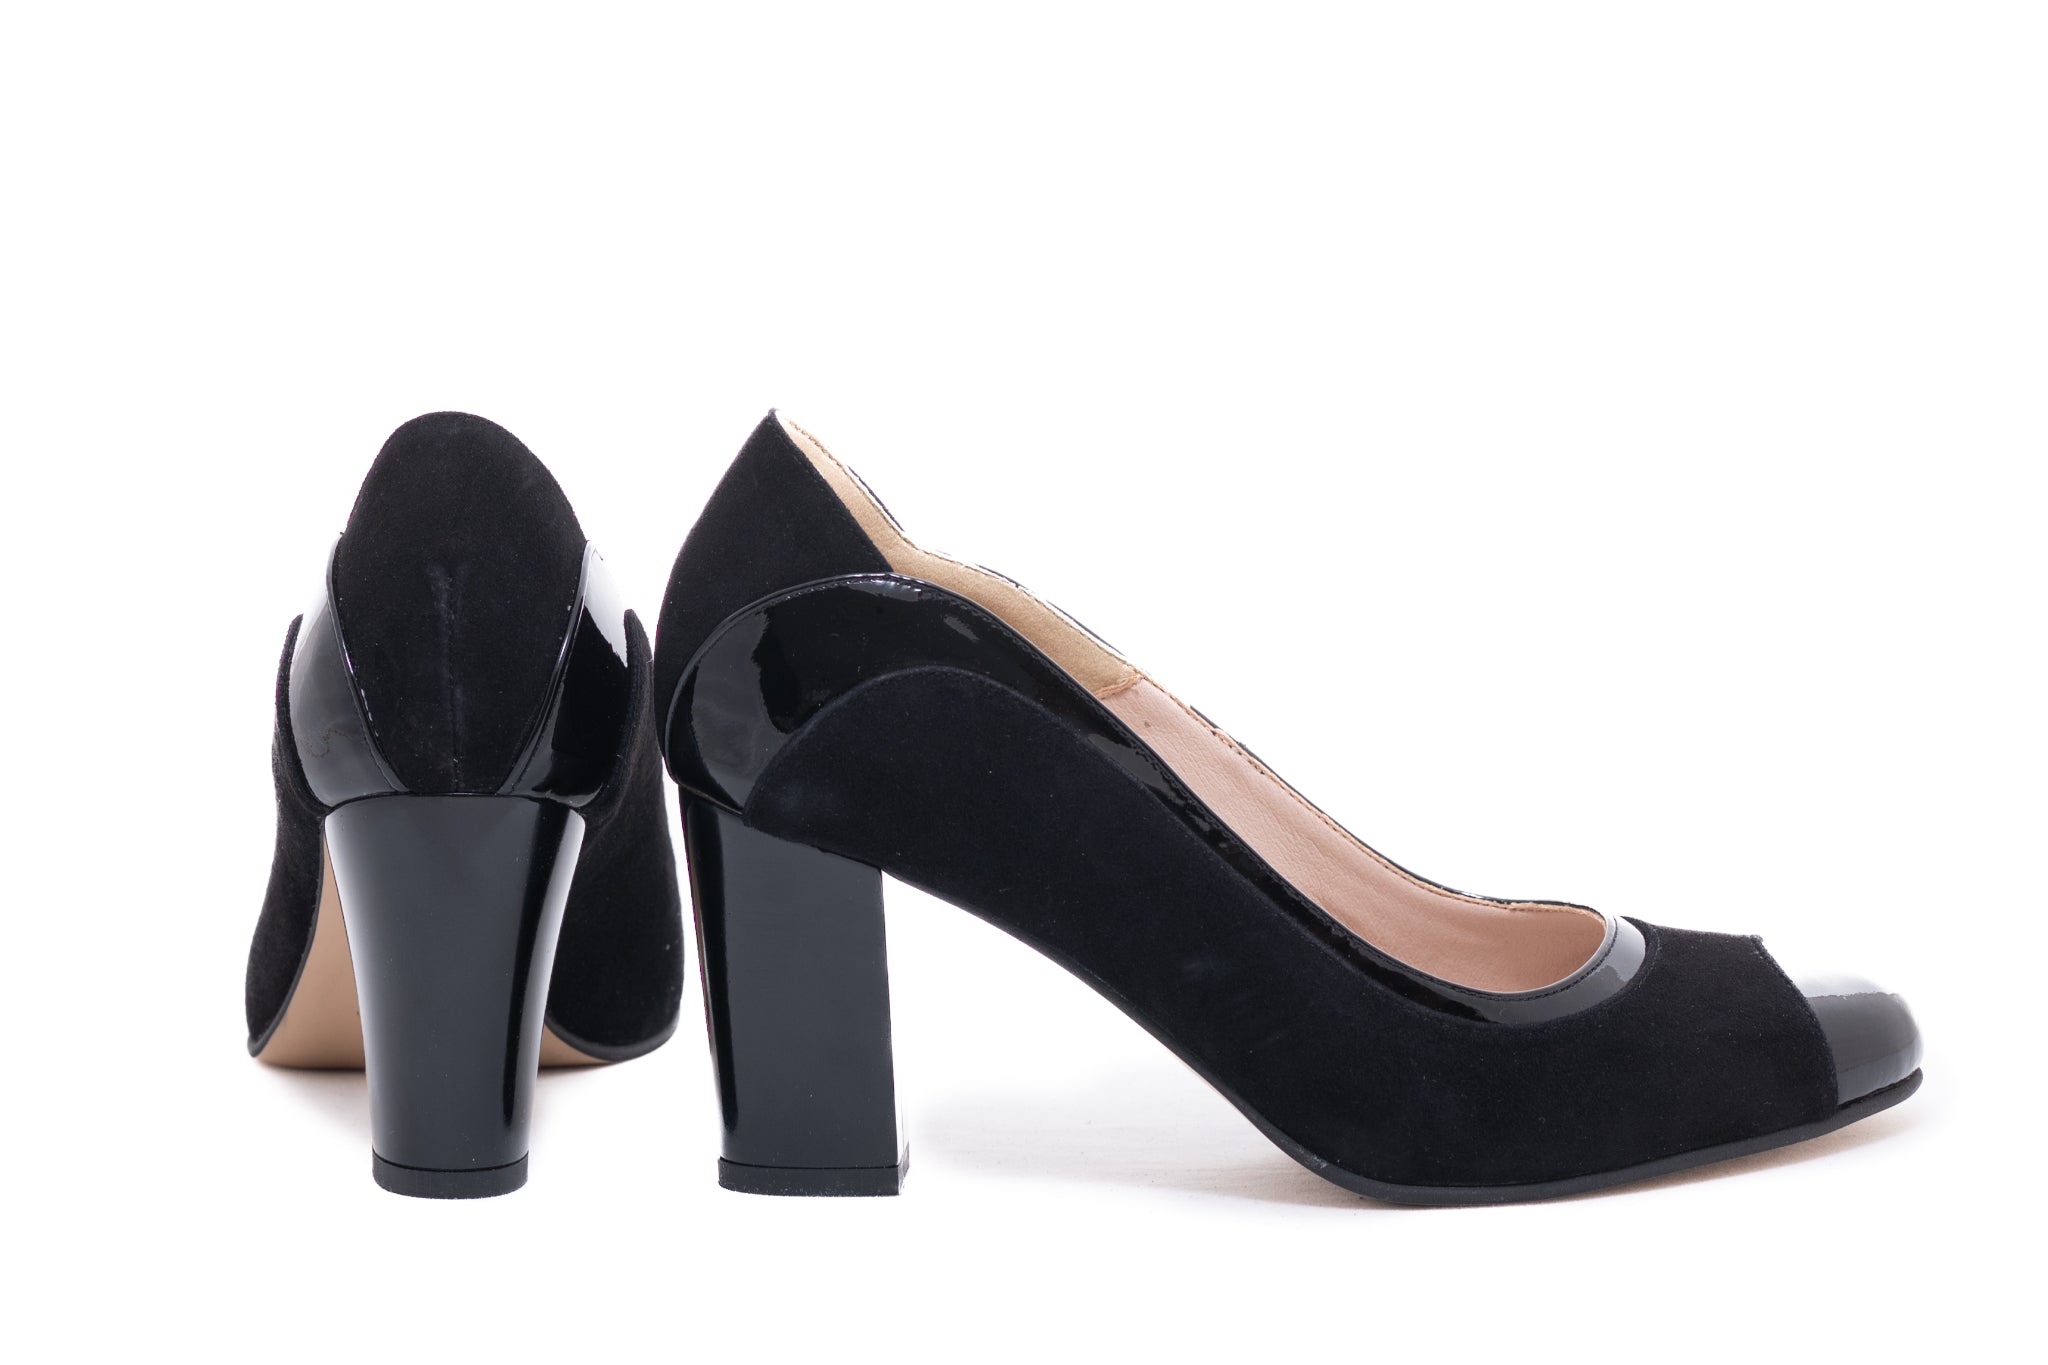 Pantofi dama eleganti piele naturala 736 negru velur lac